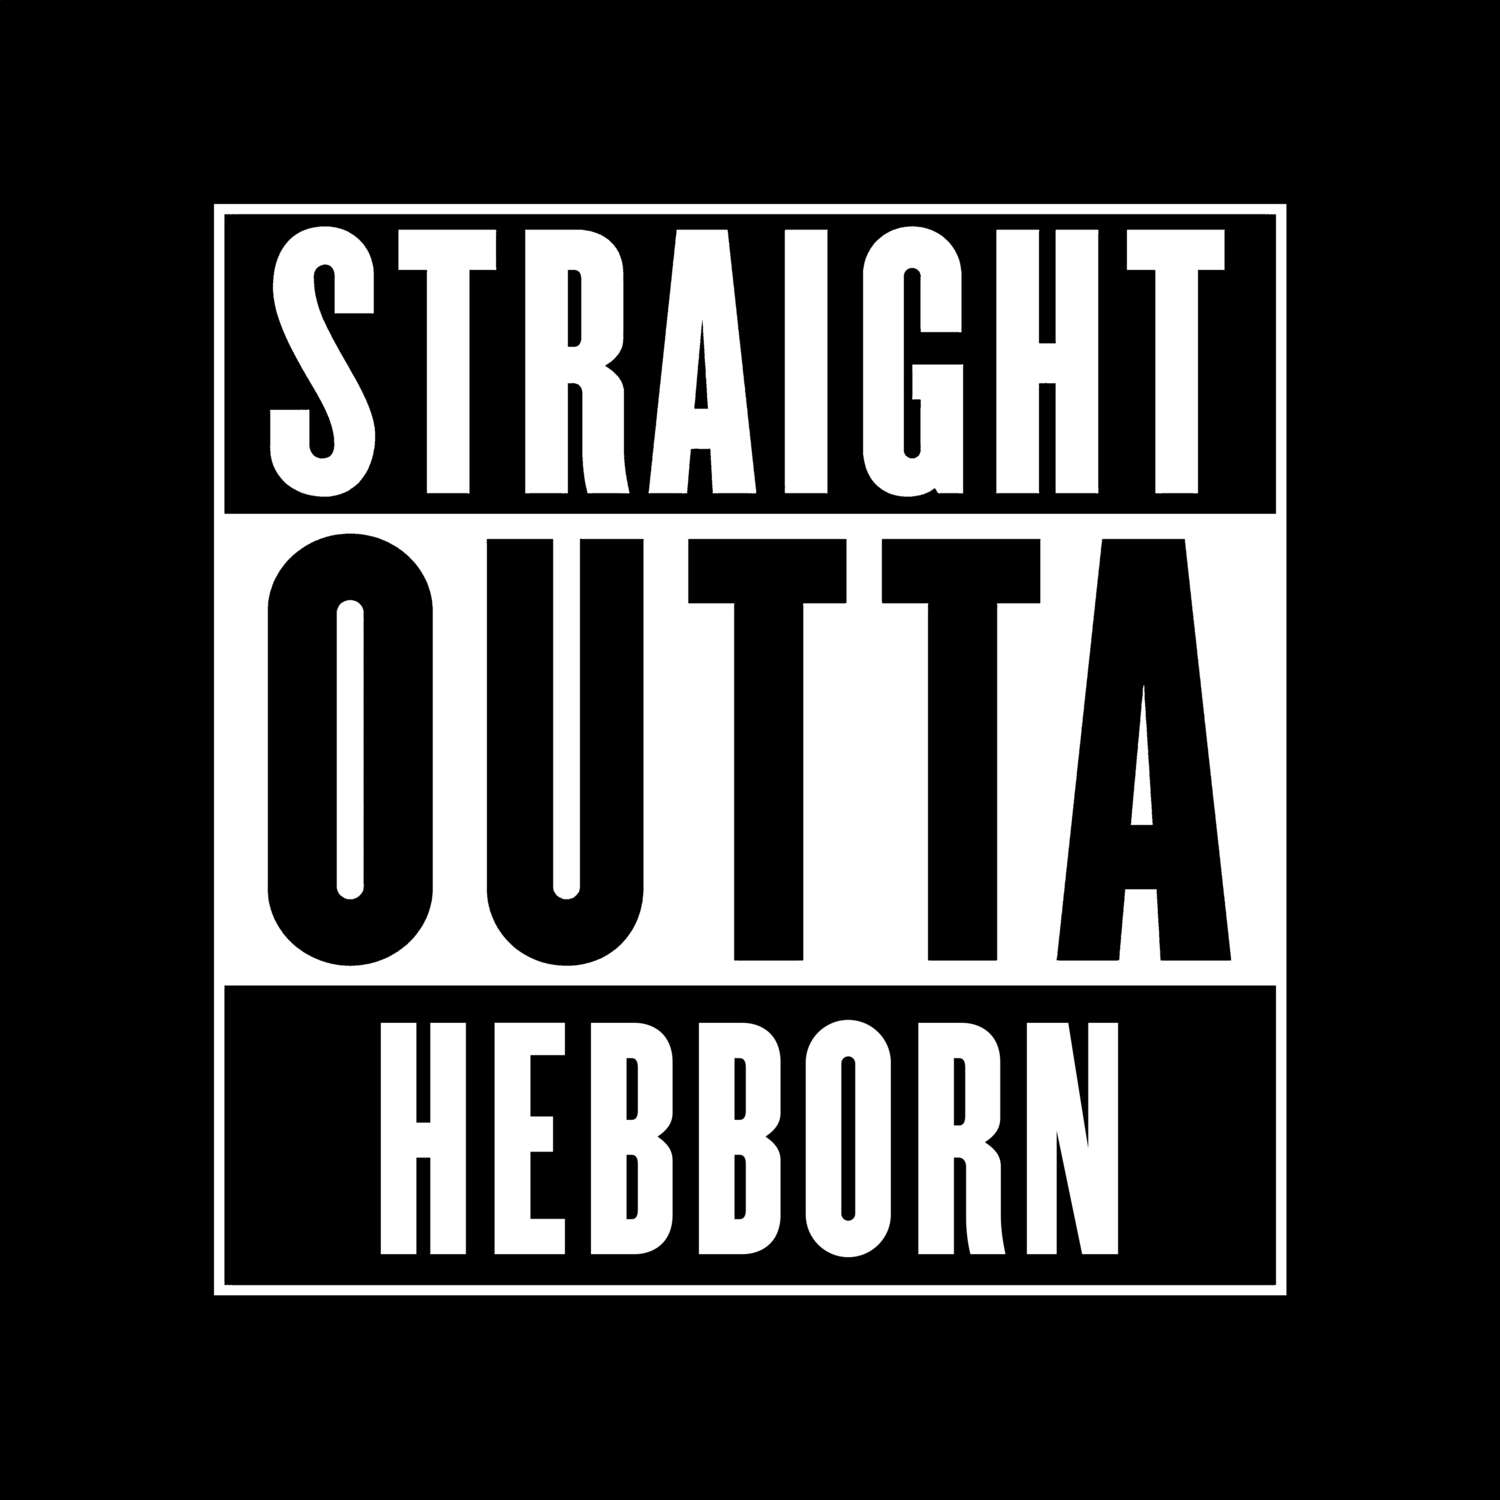 Hebborn T-Shirt »Straight Outta«